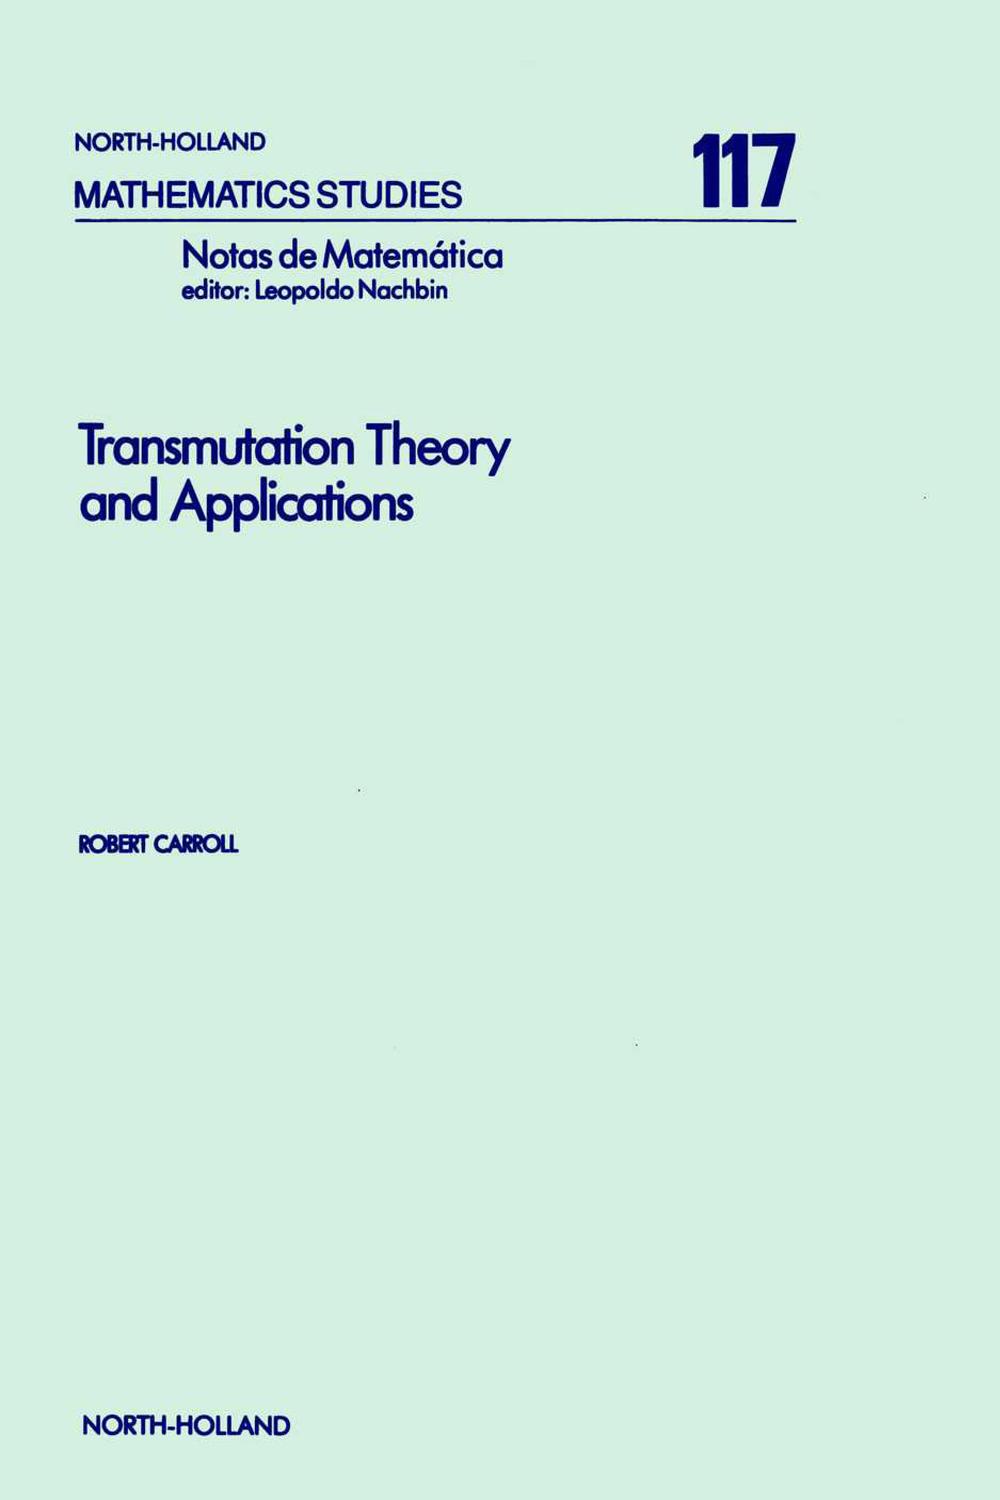 Transmutation Theory and Applications - R. Carroll